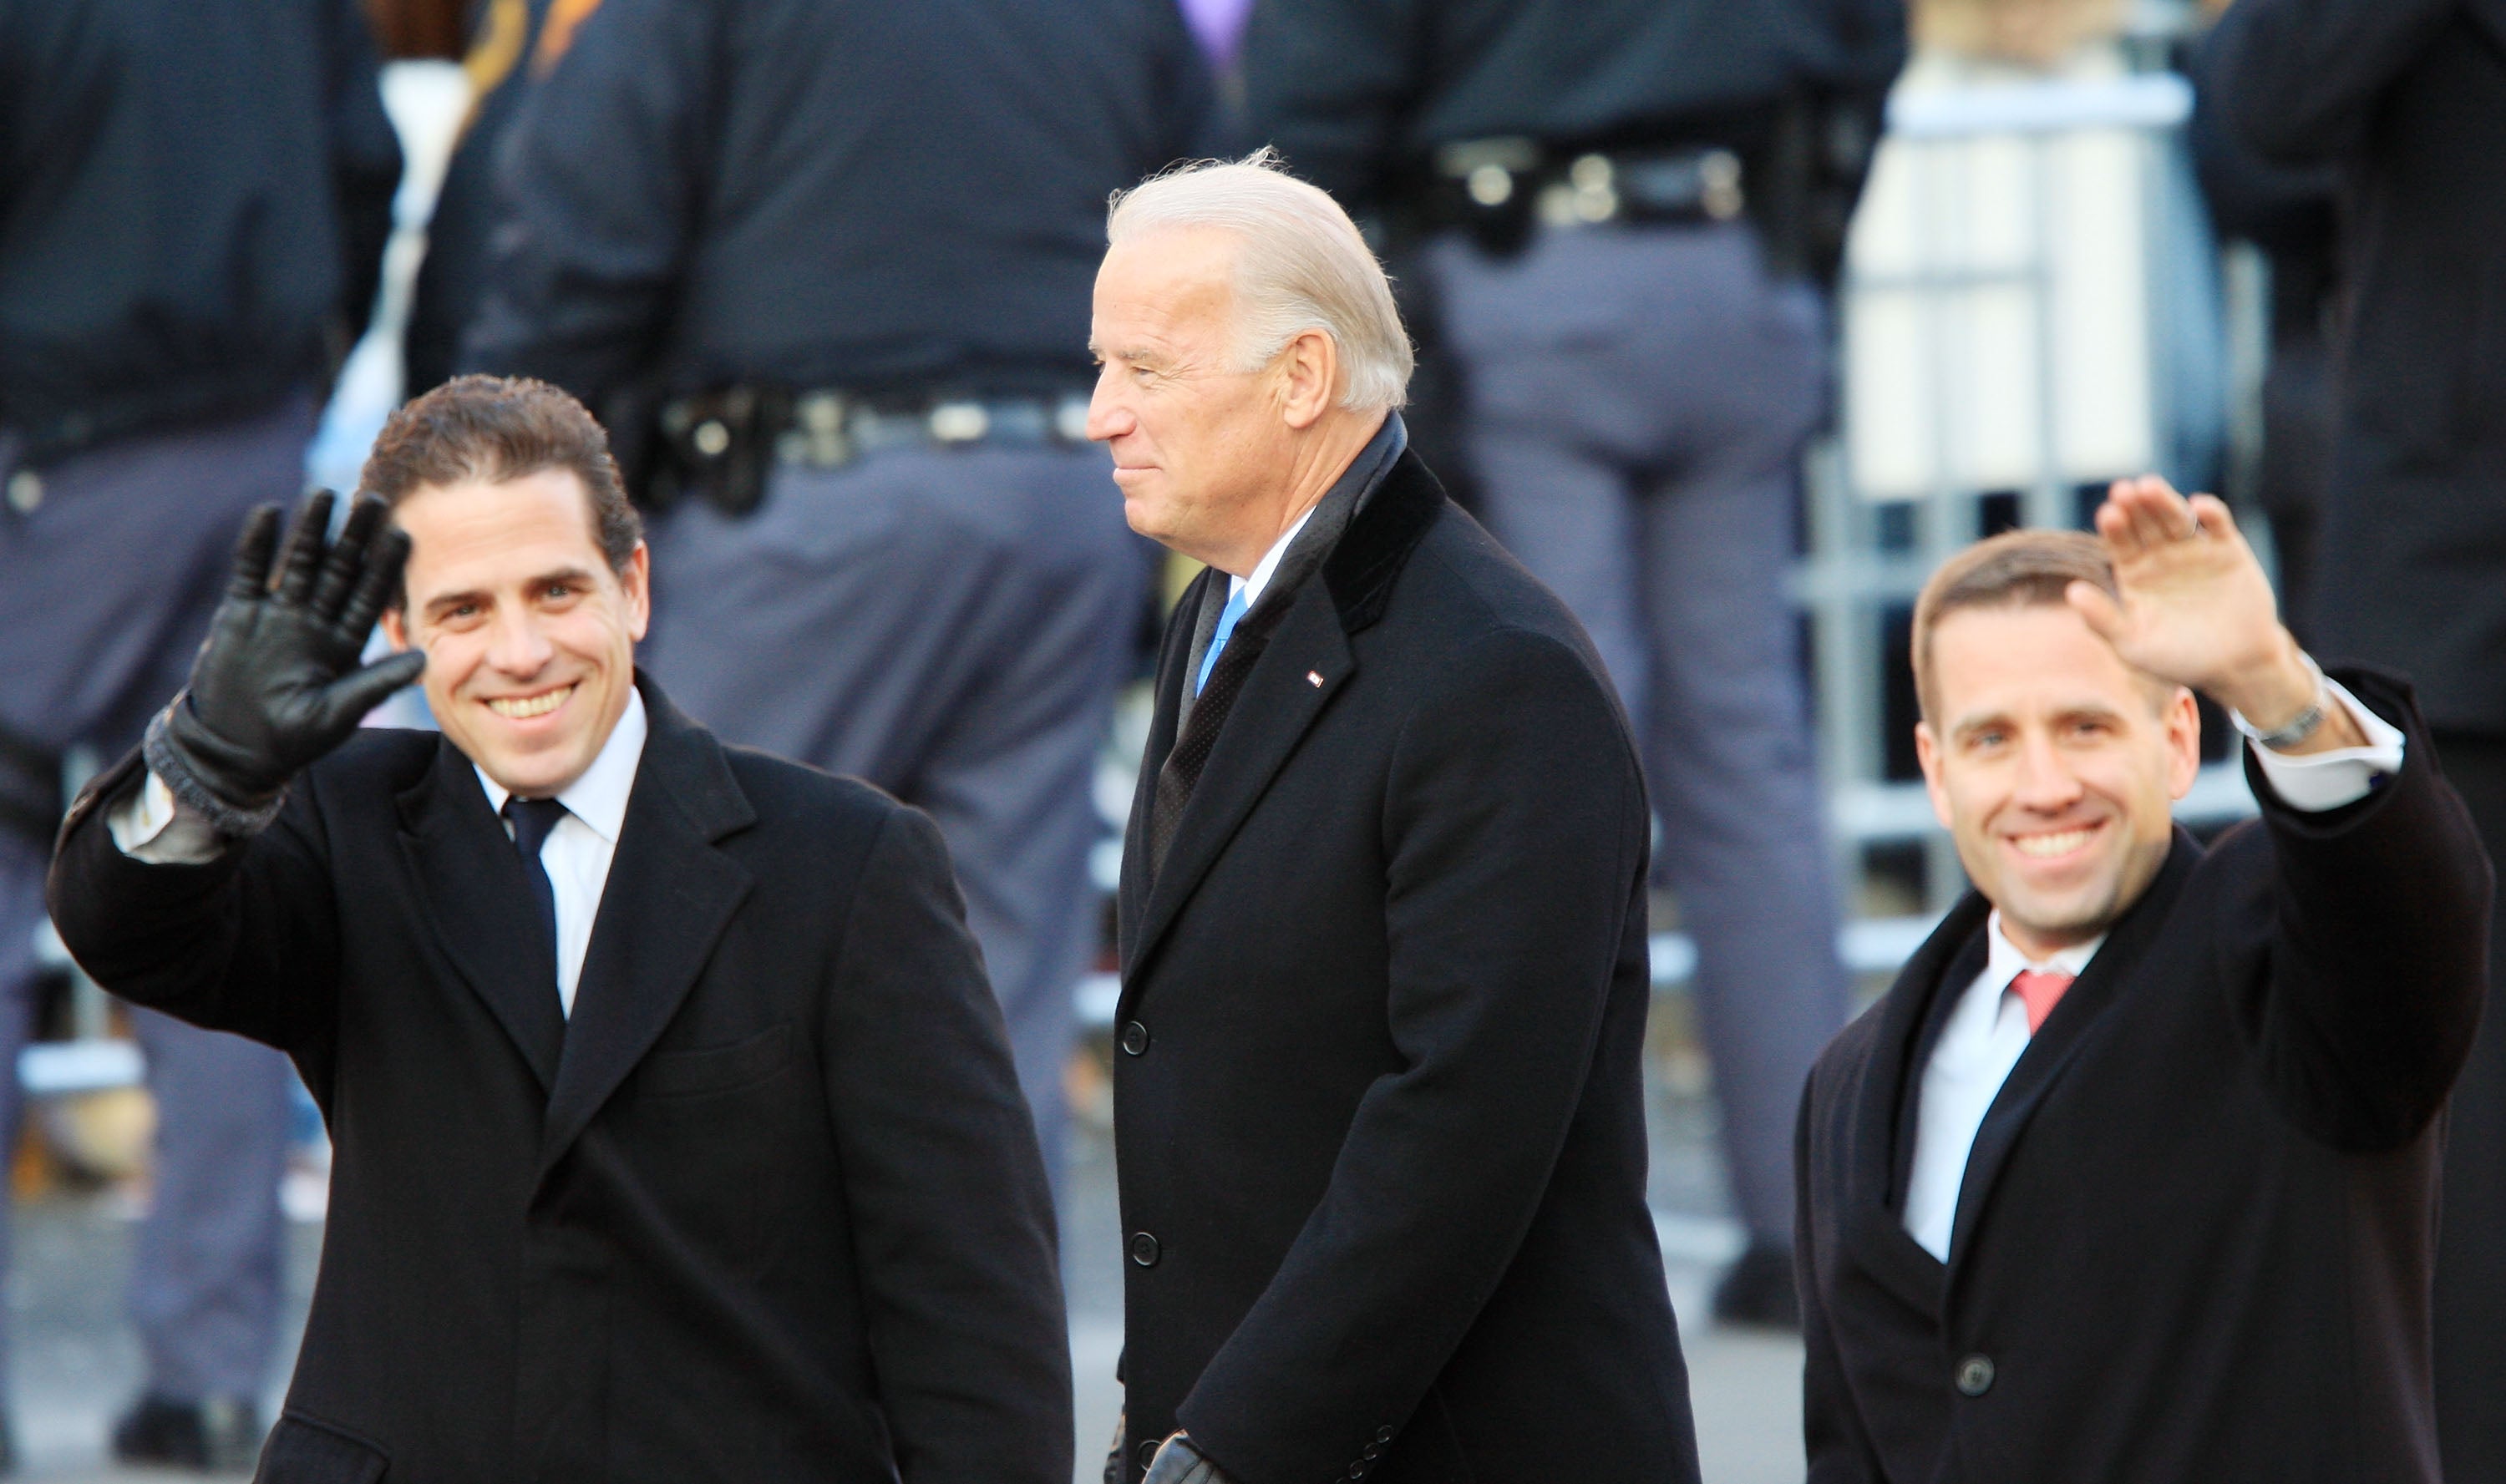 Vice-President Joe Biden and sons Hunter Biden (L) and Beau Biden walk in the Inaugural Parade in 2009 in Washington when Barack Obama was sworn in as the 44th president